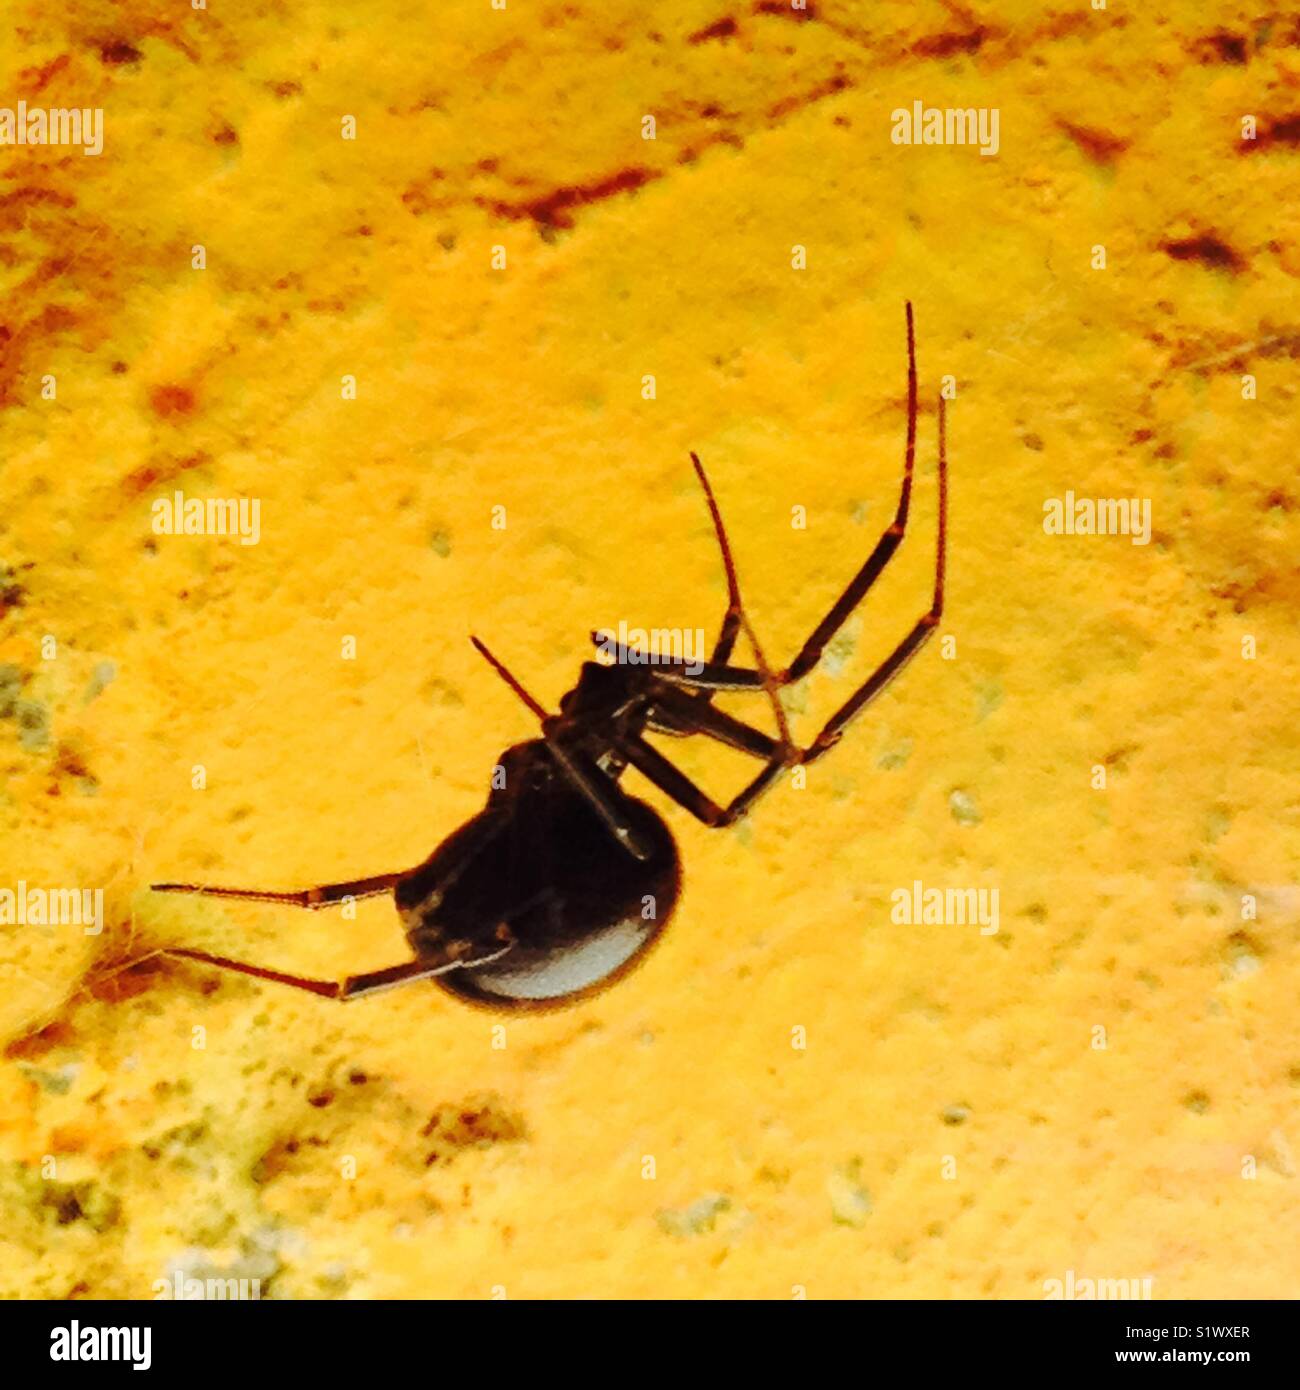 Big spider on yellow background Stock Photo